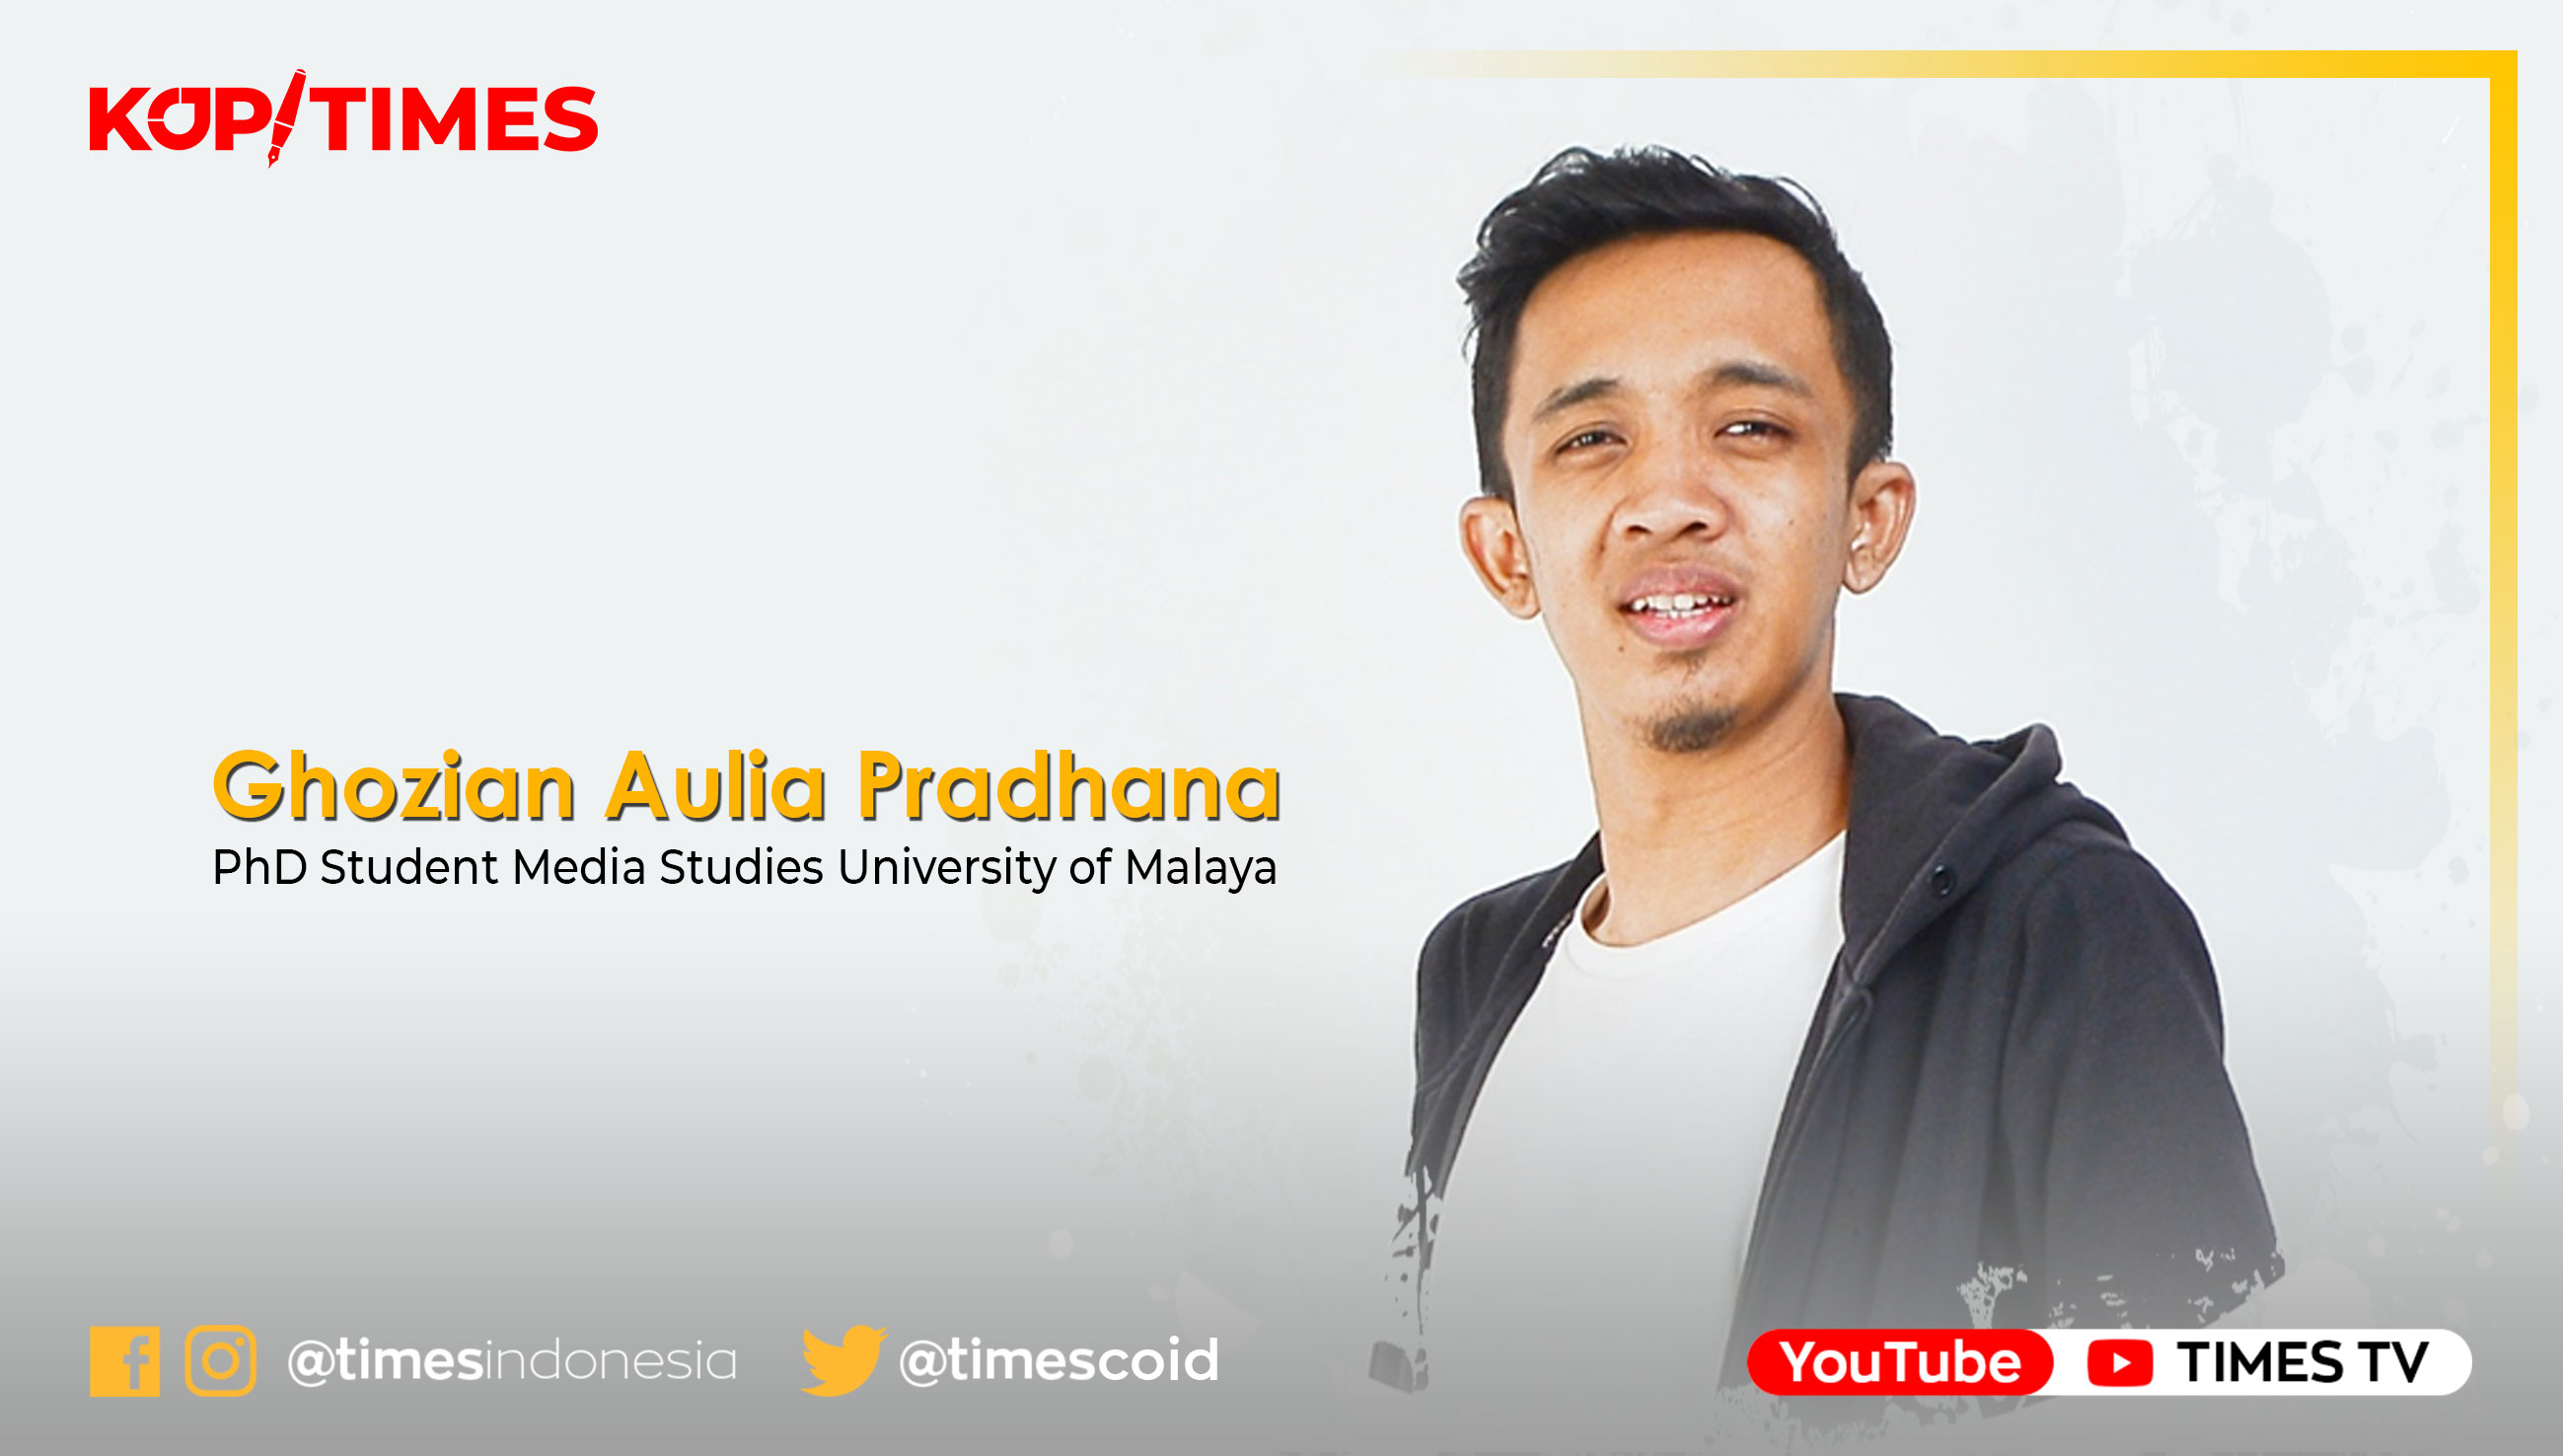 Ghozian Aulia Pradhana , PhD Student Media Studies University of Malaya.